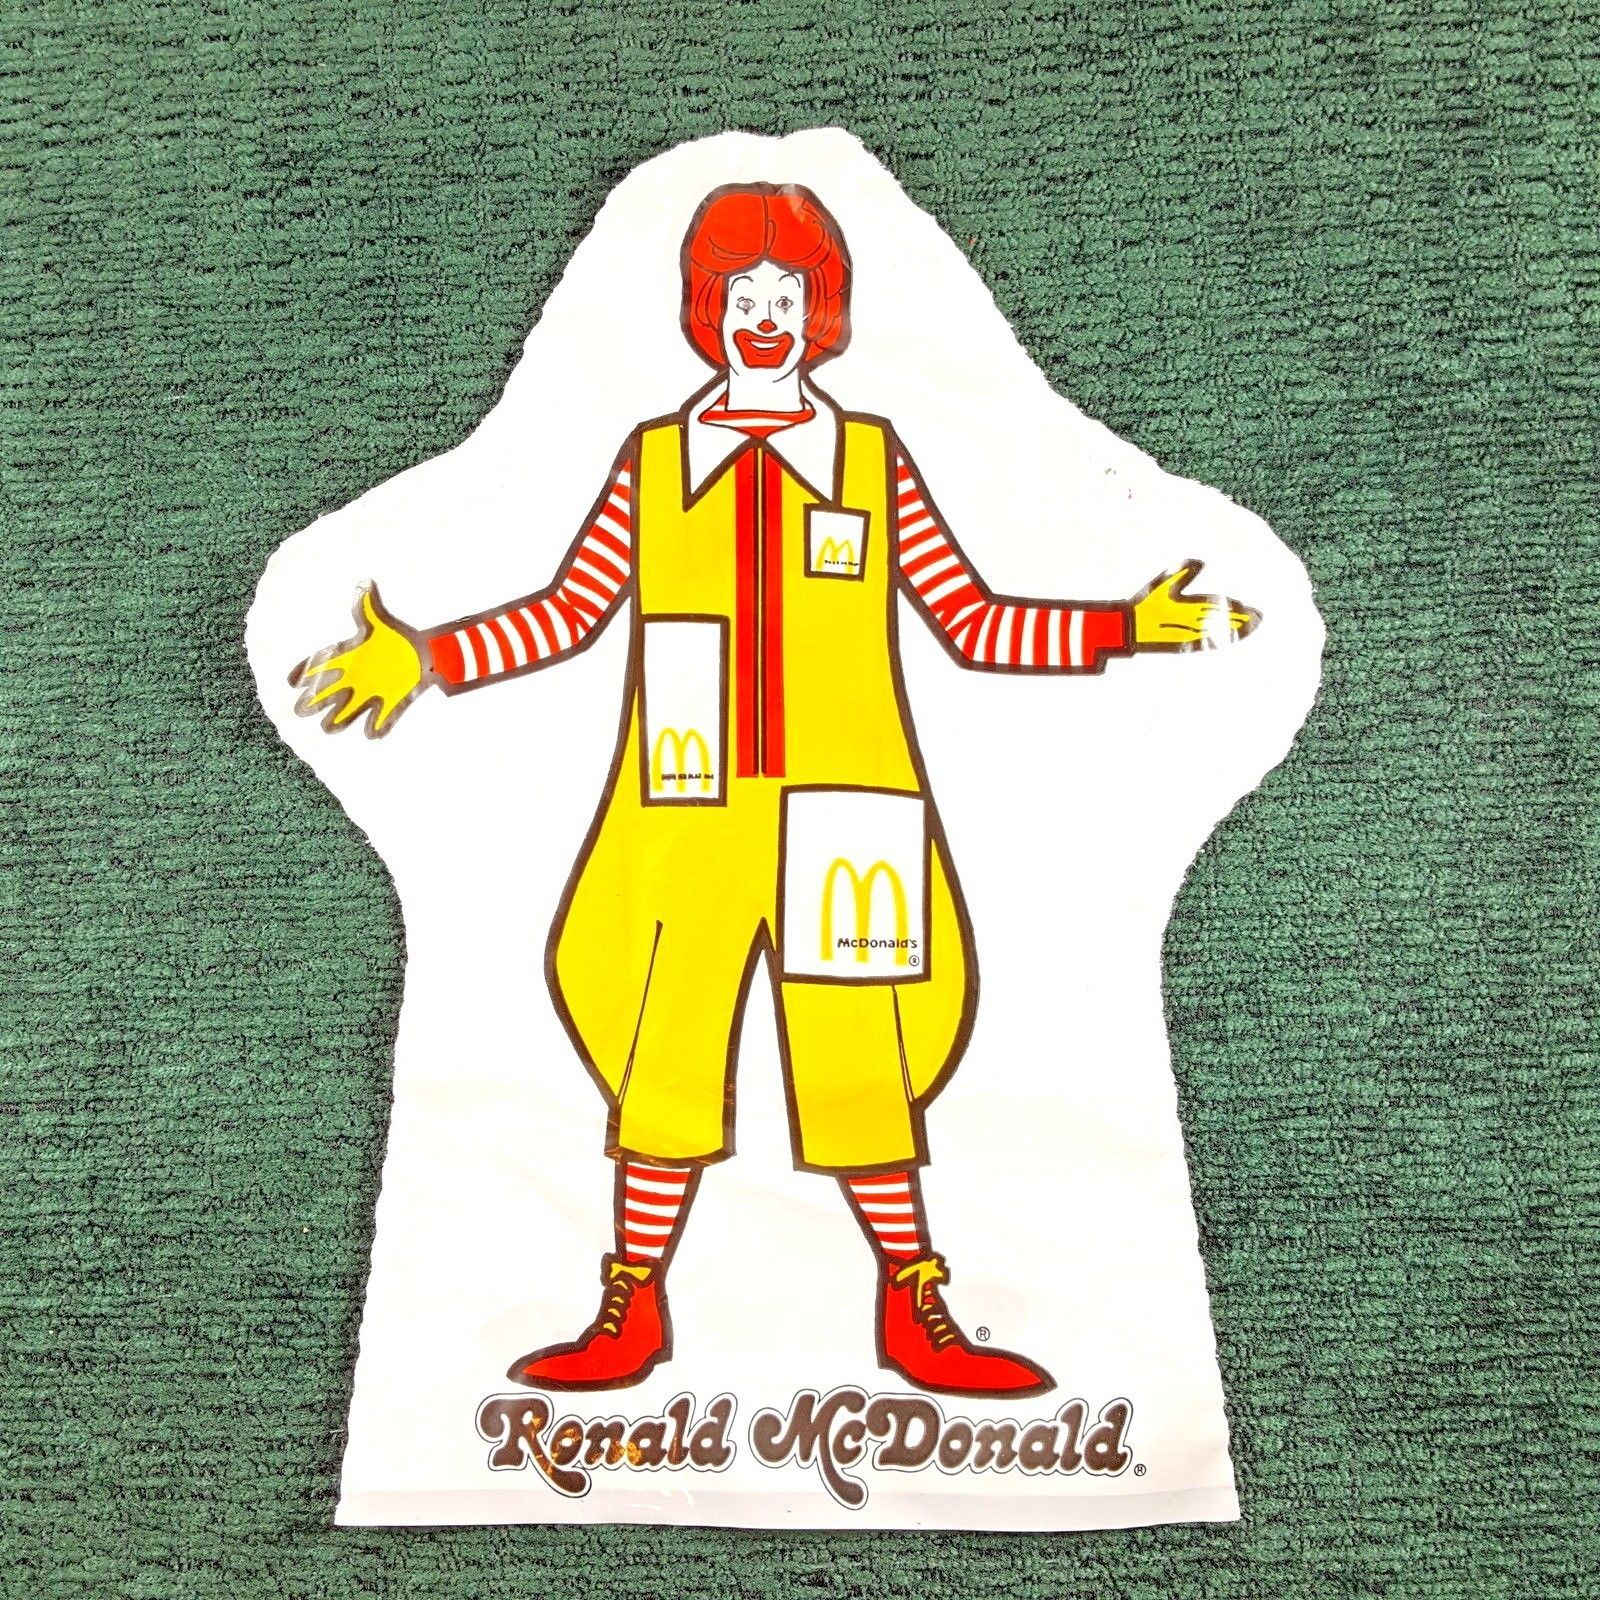 Ronald McDonald Hand Puppet Toy